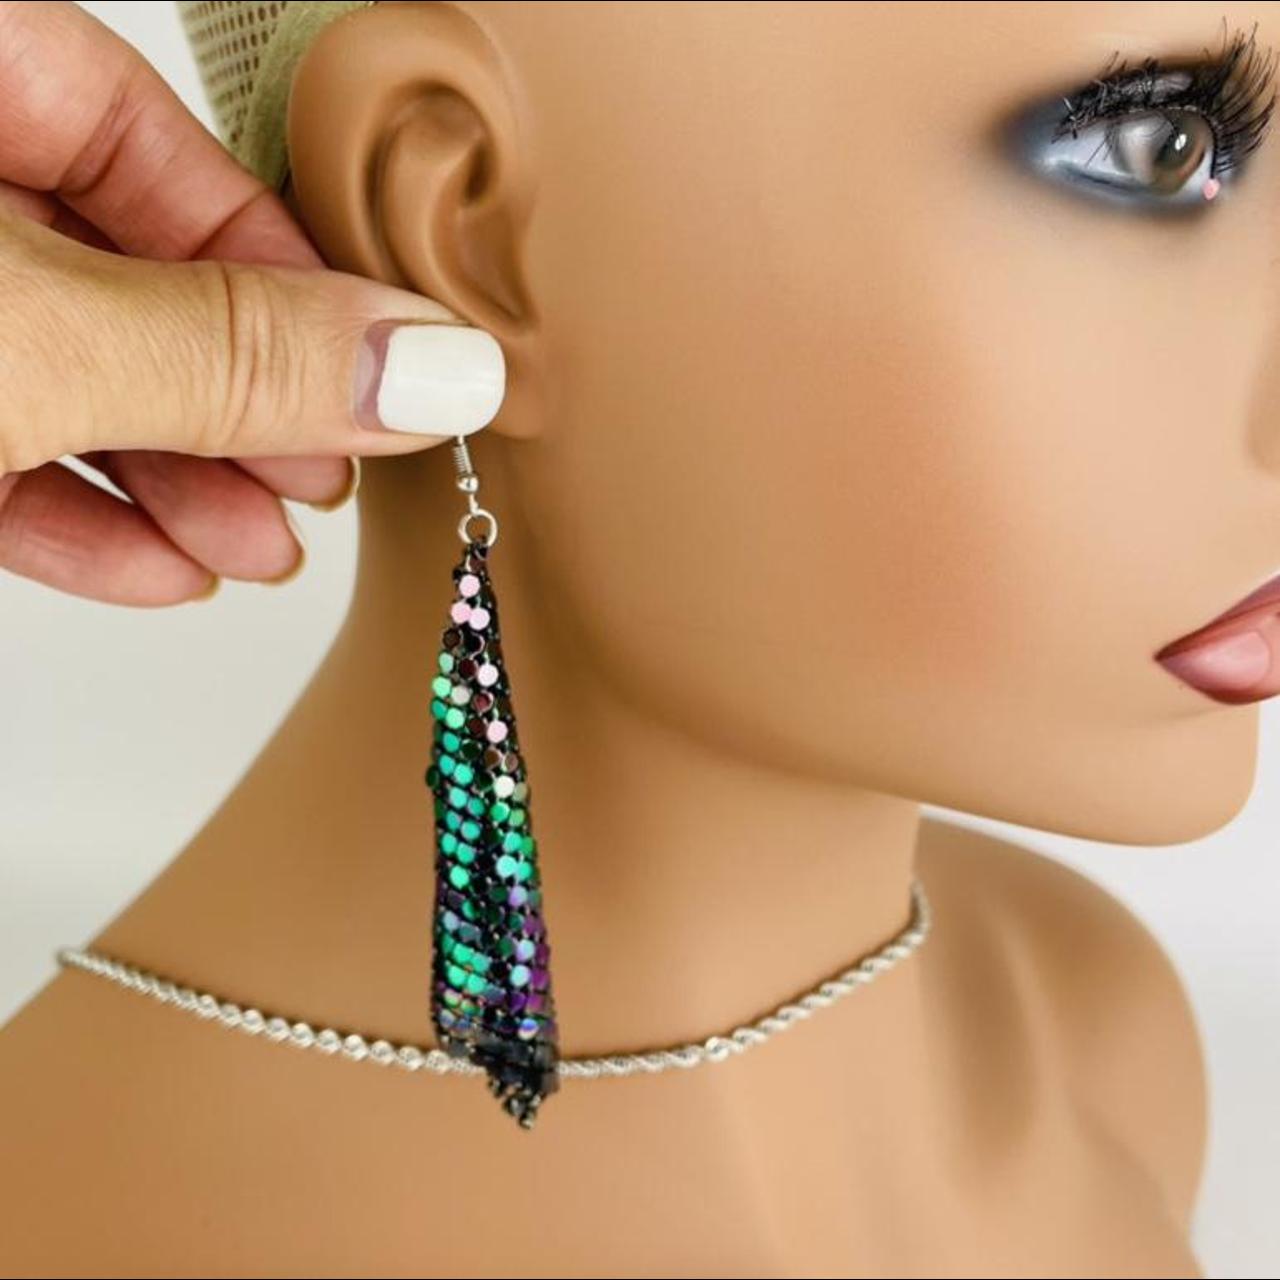 Product Image 1 - Beautiful earrings #goth #chain #choker